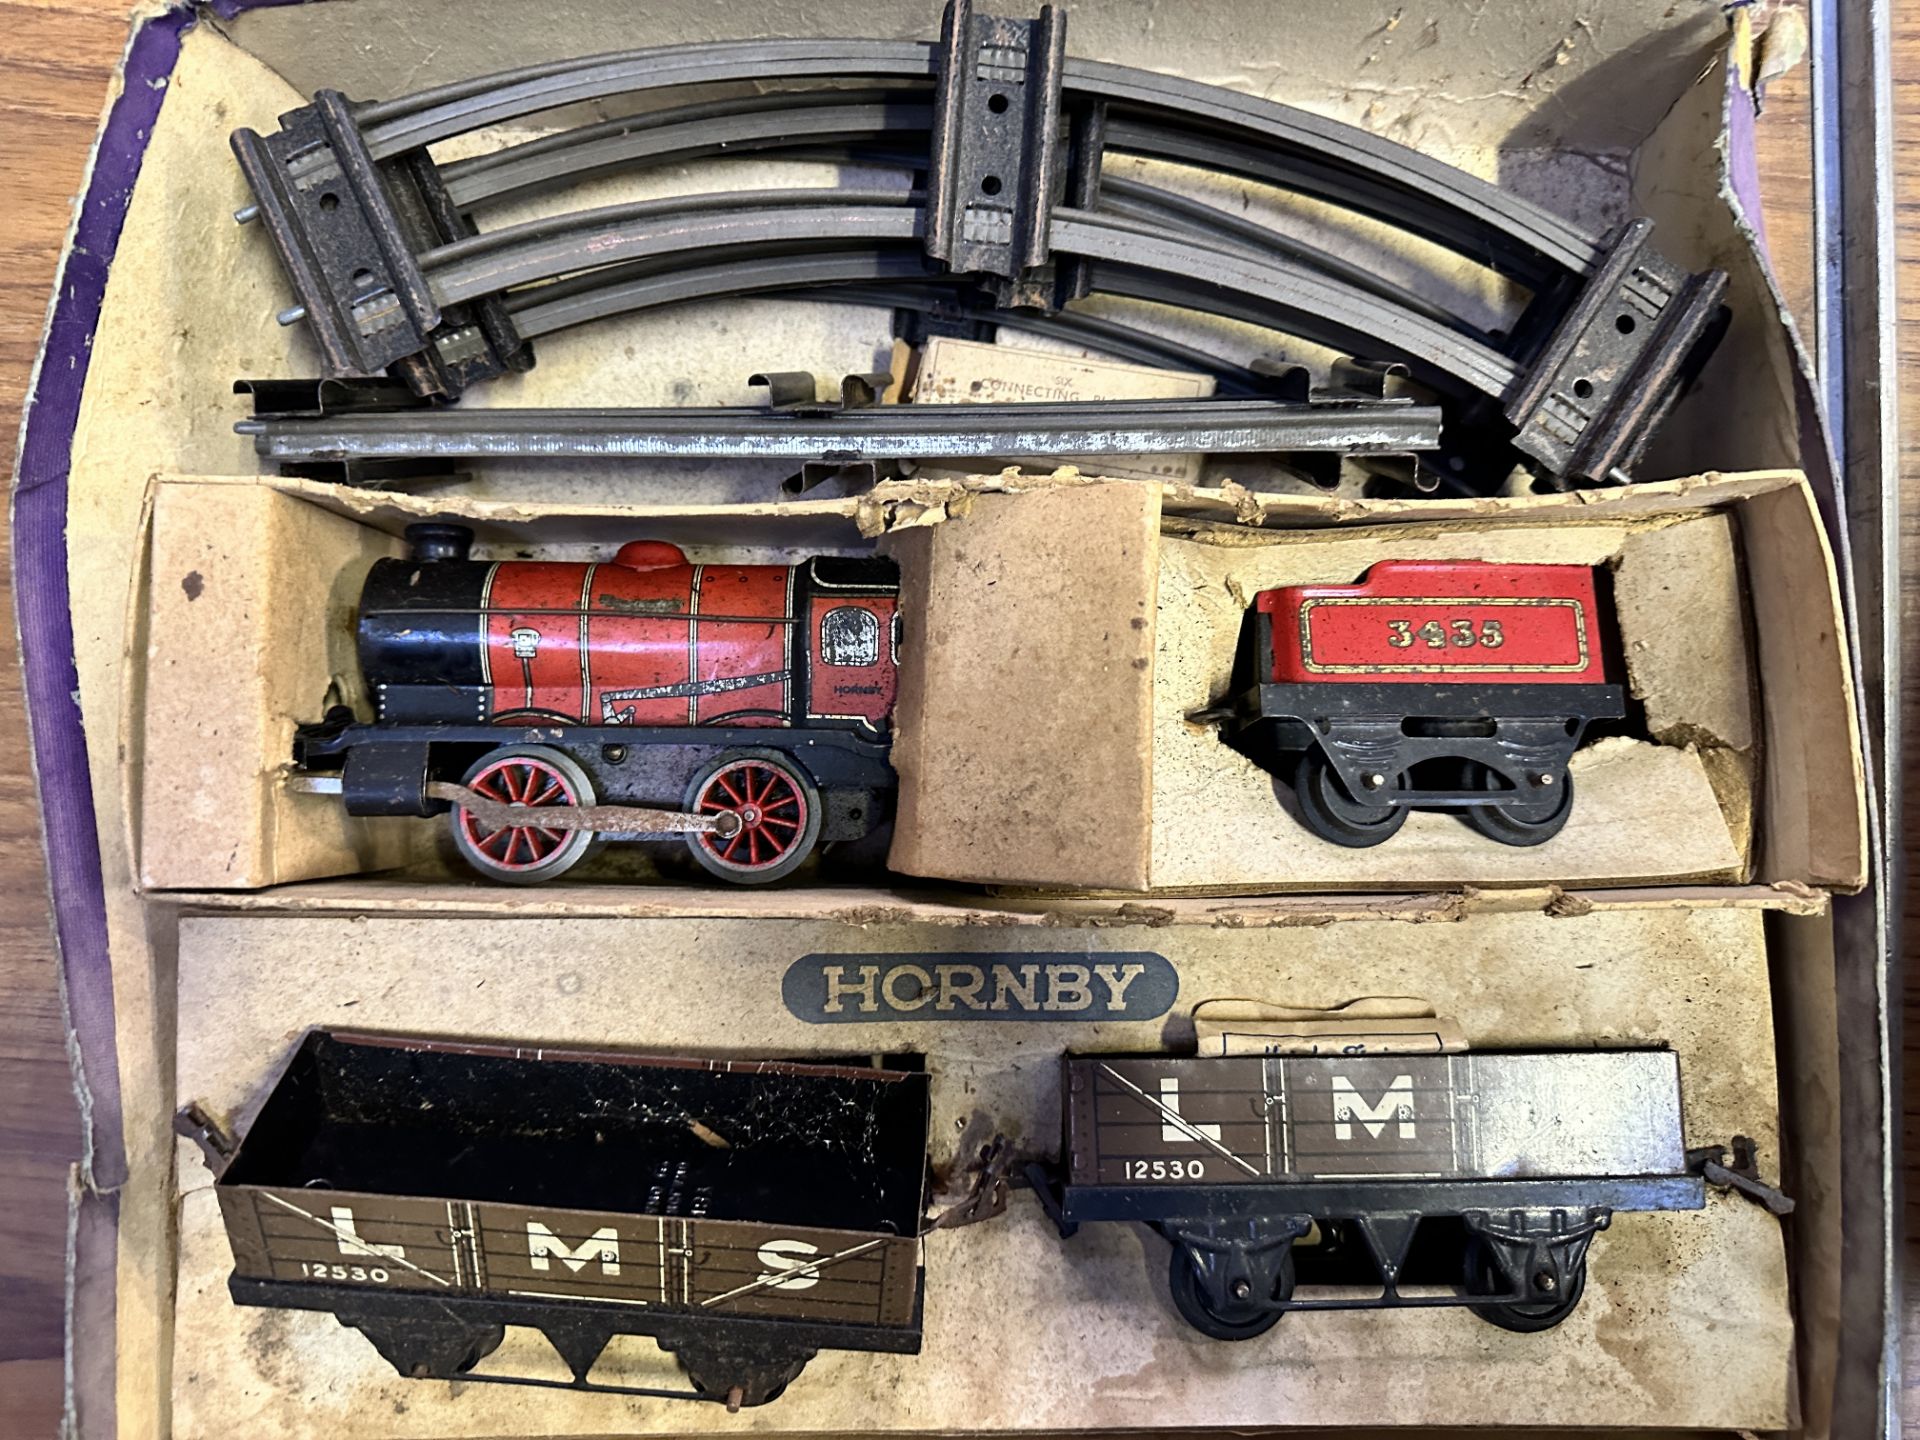 Hornby tinplate clockwork train set